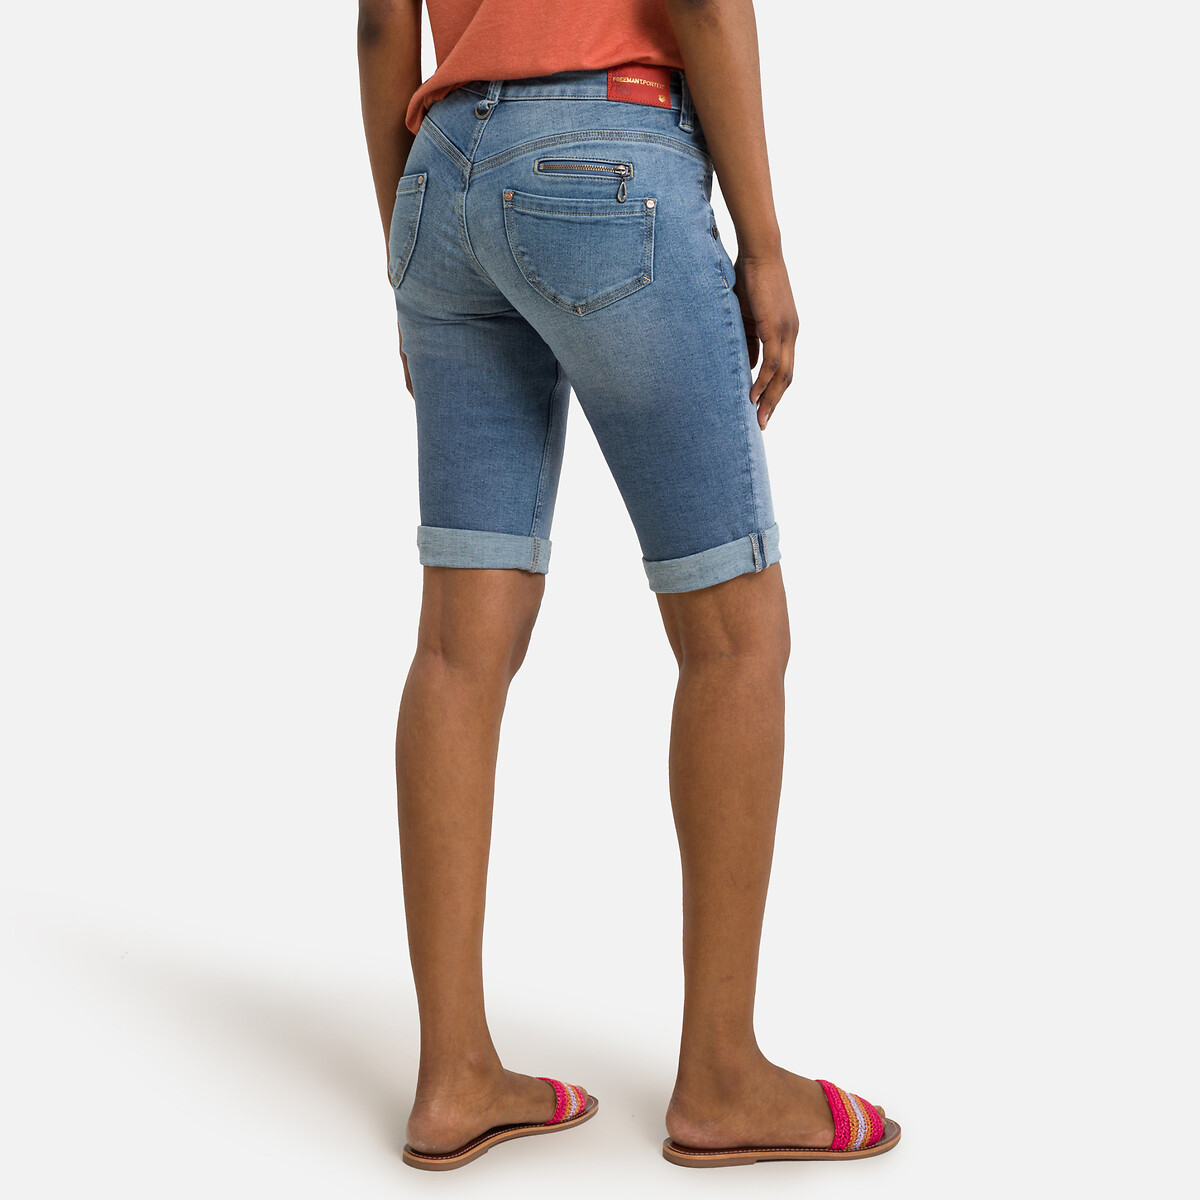 Бермуды Из джинсовой ткани S синий LaRedoute, размер S - фото 4